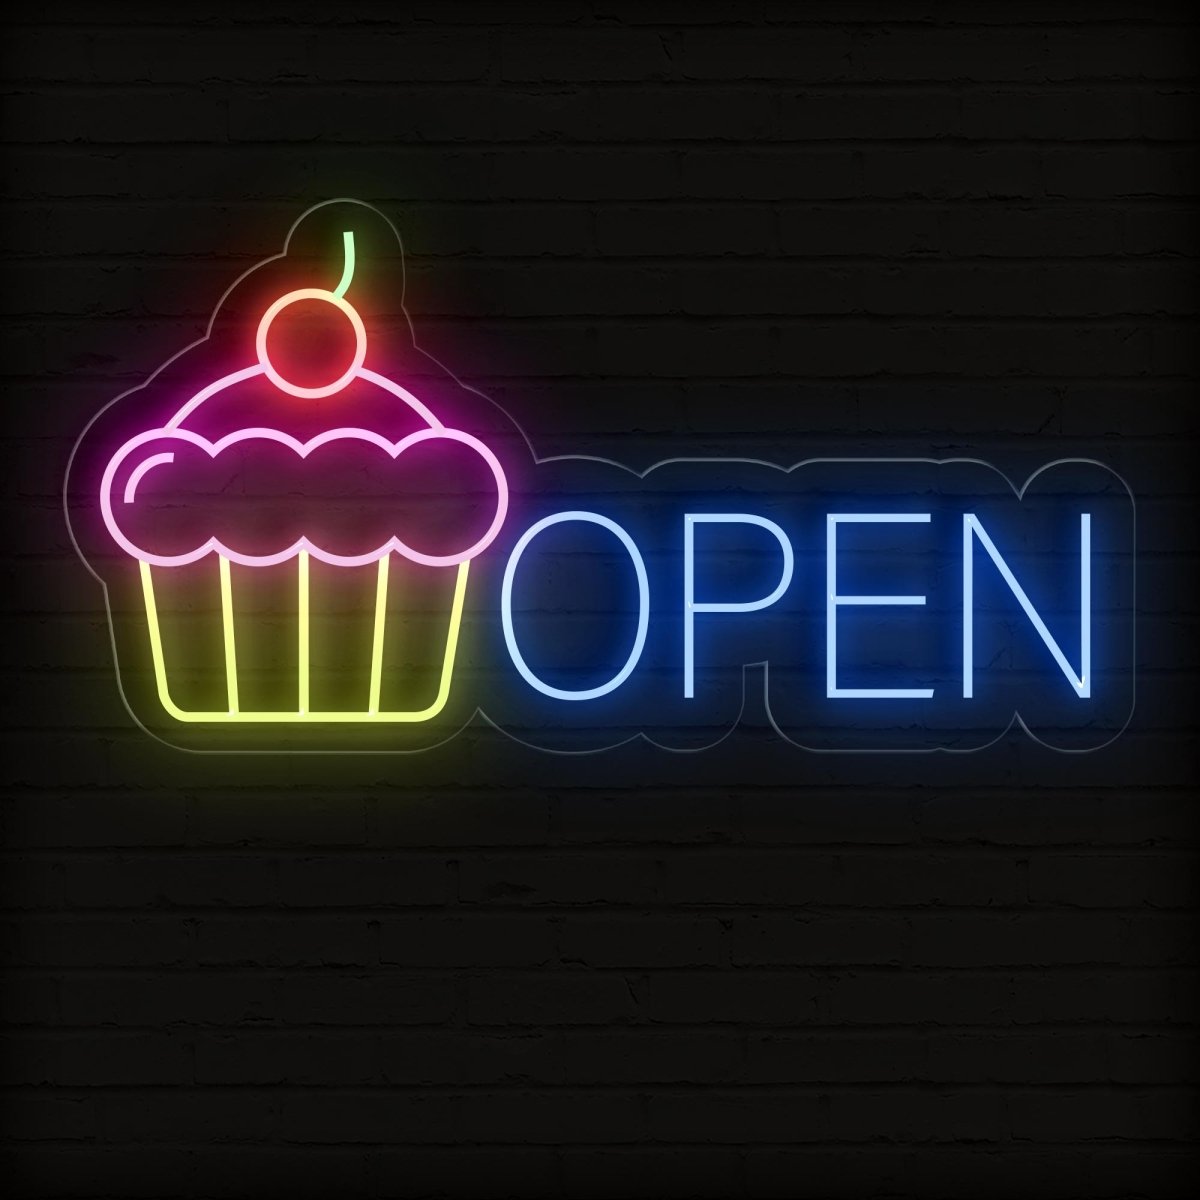 Cupcake Open Neon Sign | Sweet Delights Await! - NEONXPERT